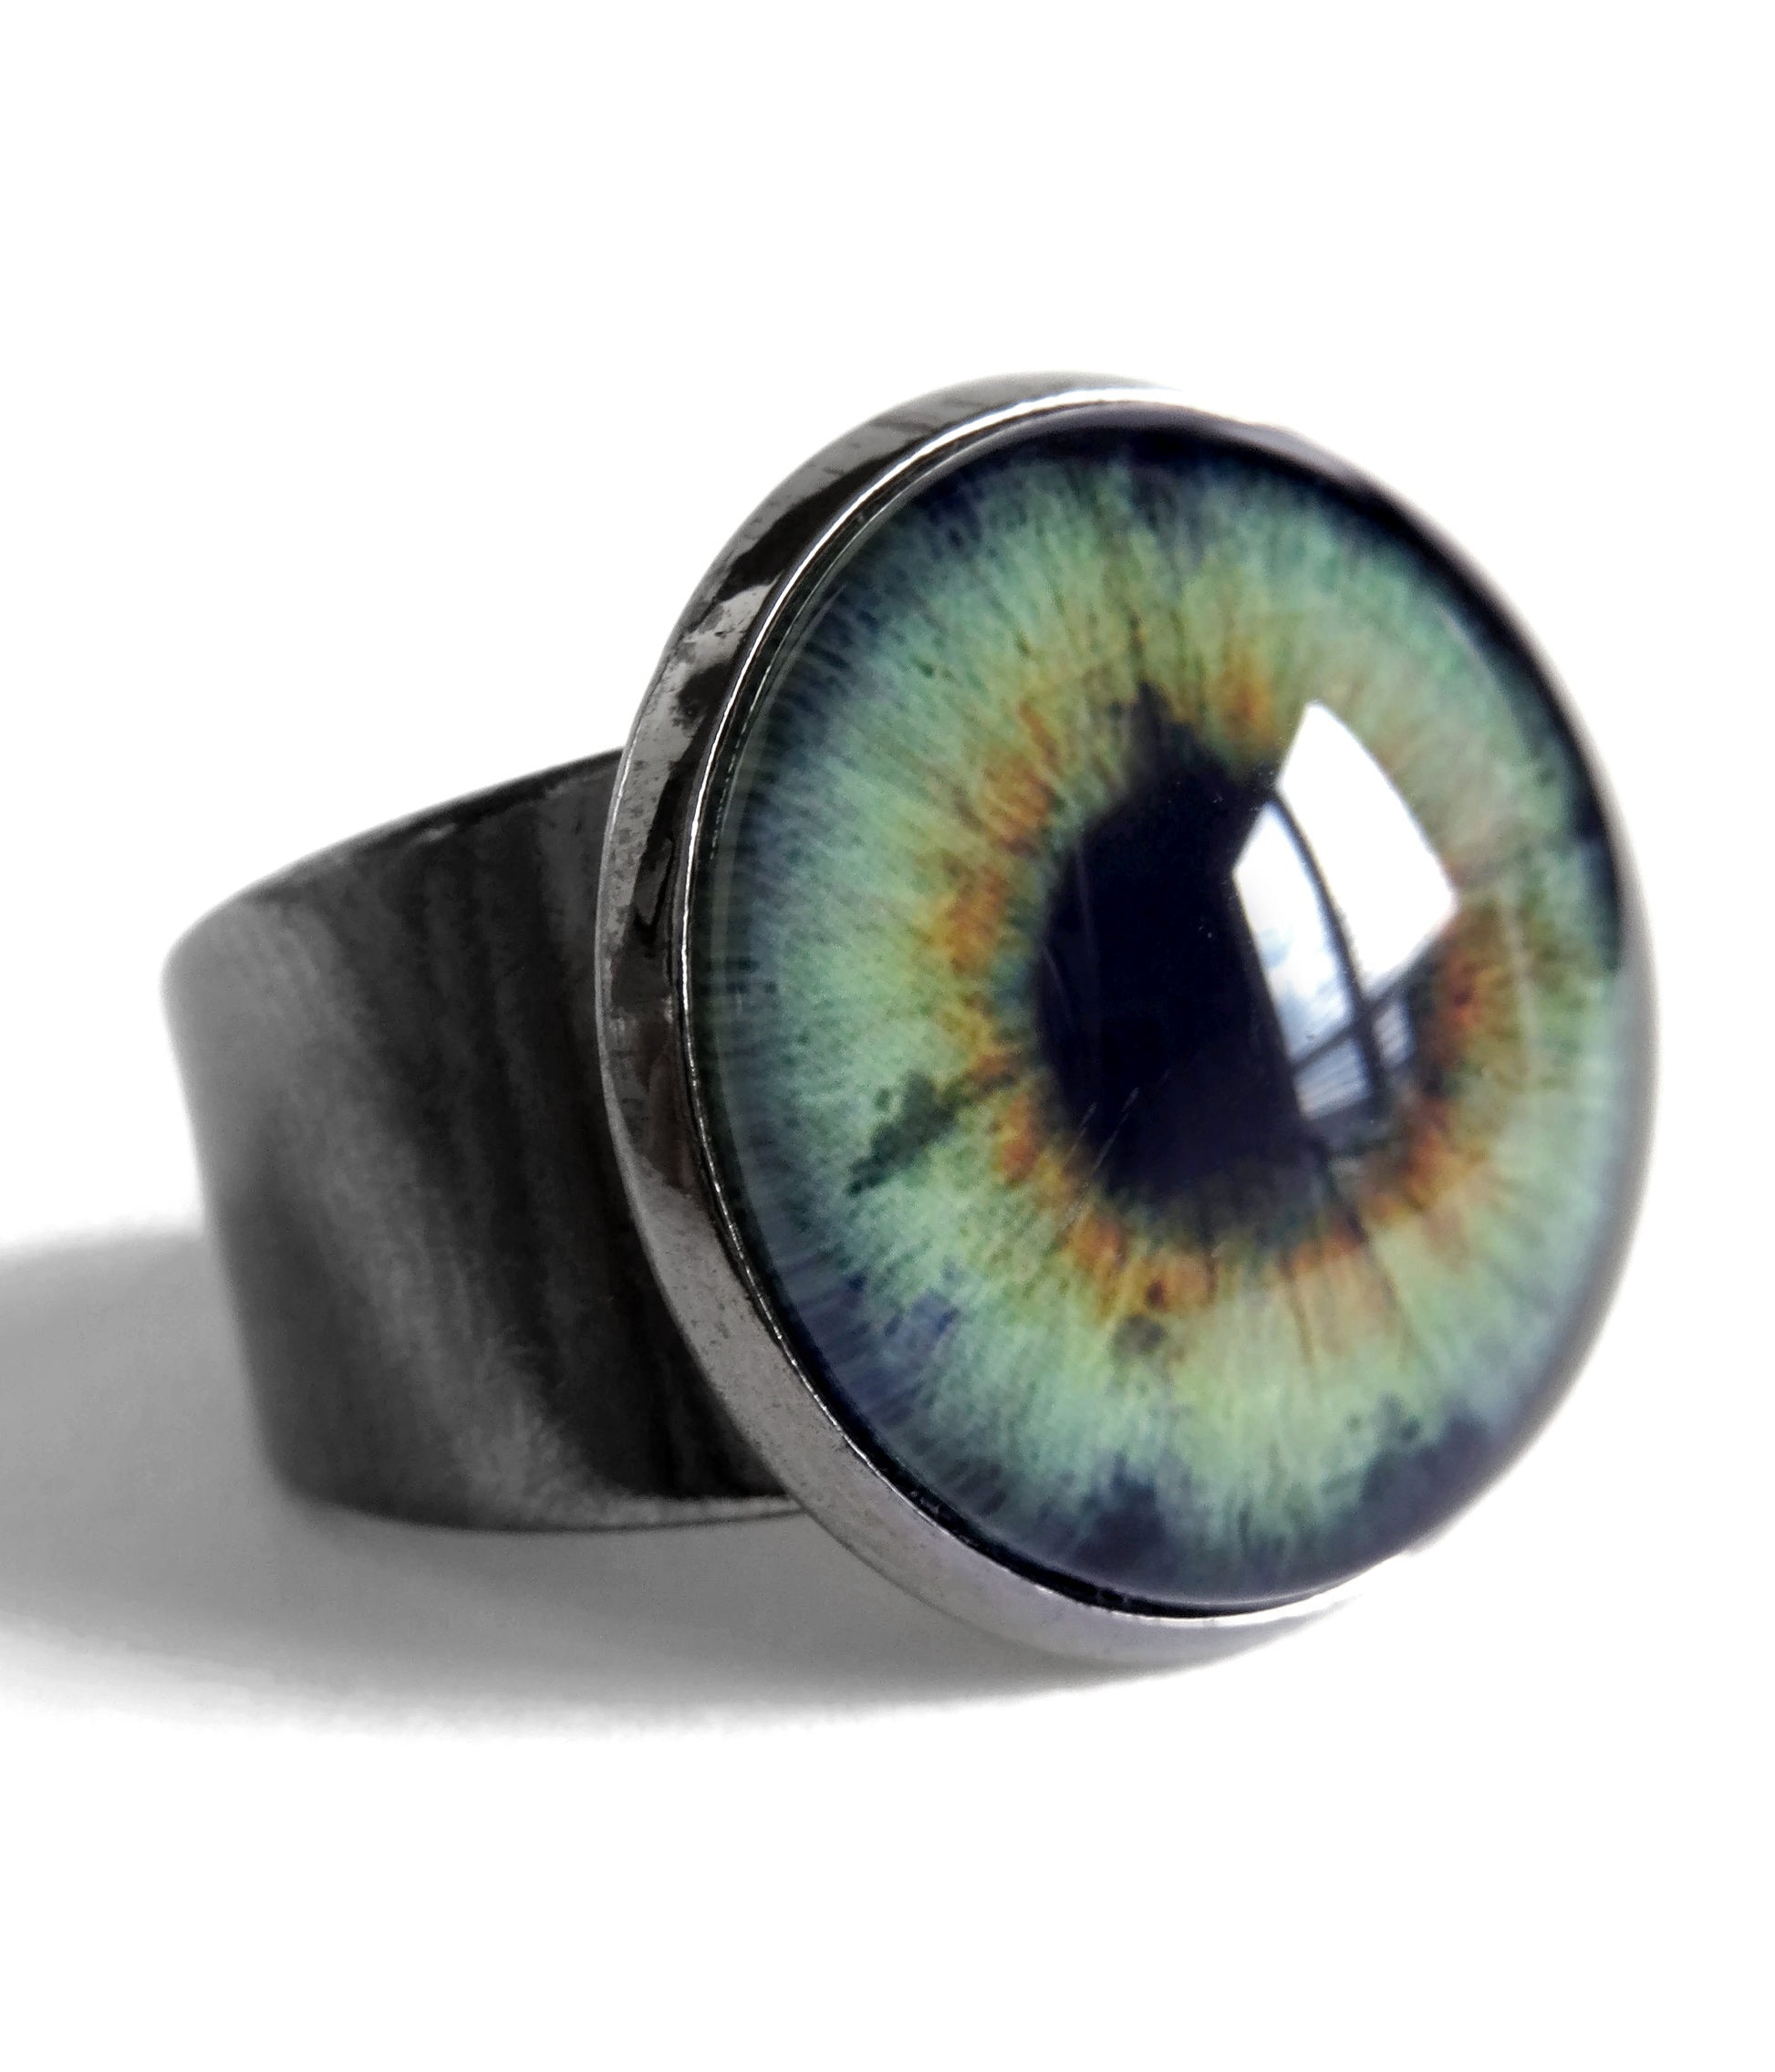 Goth Halloween Eyeball Ring with Glossy Green Eye